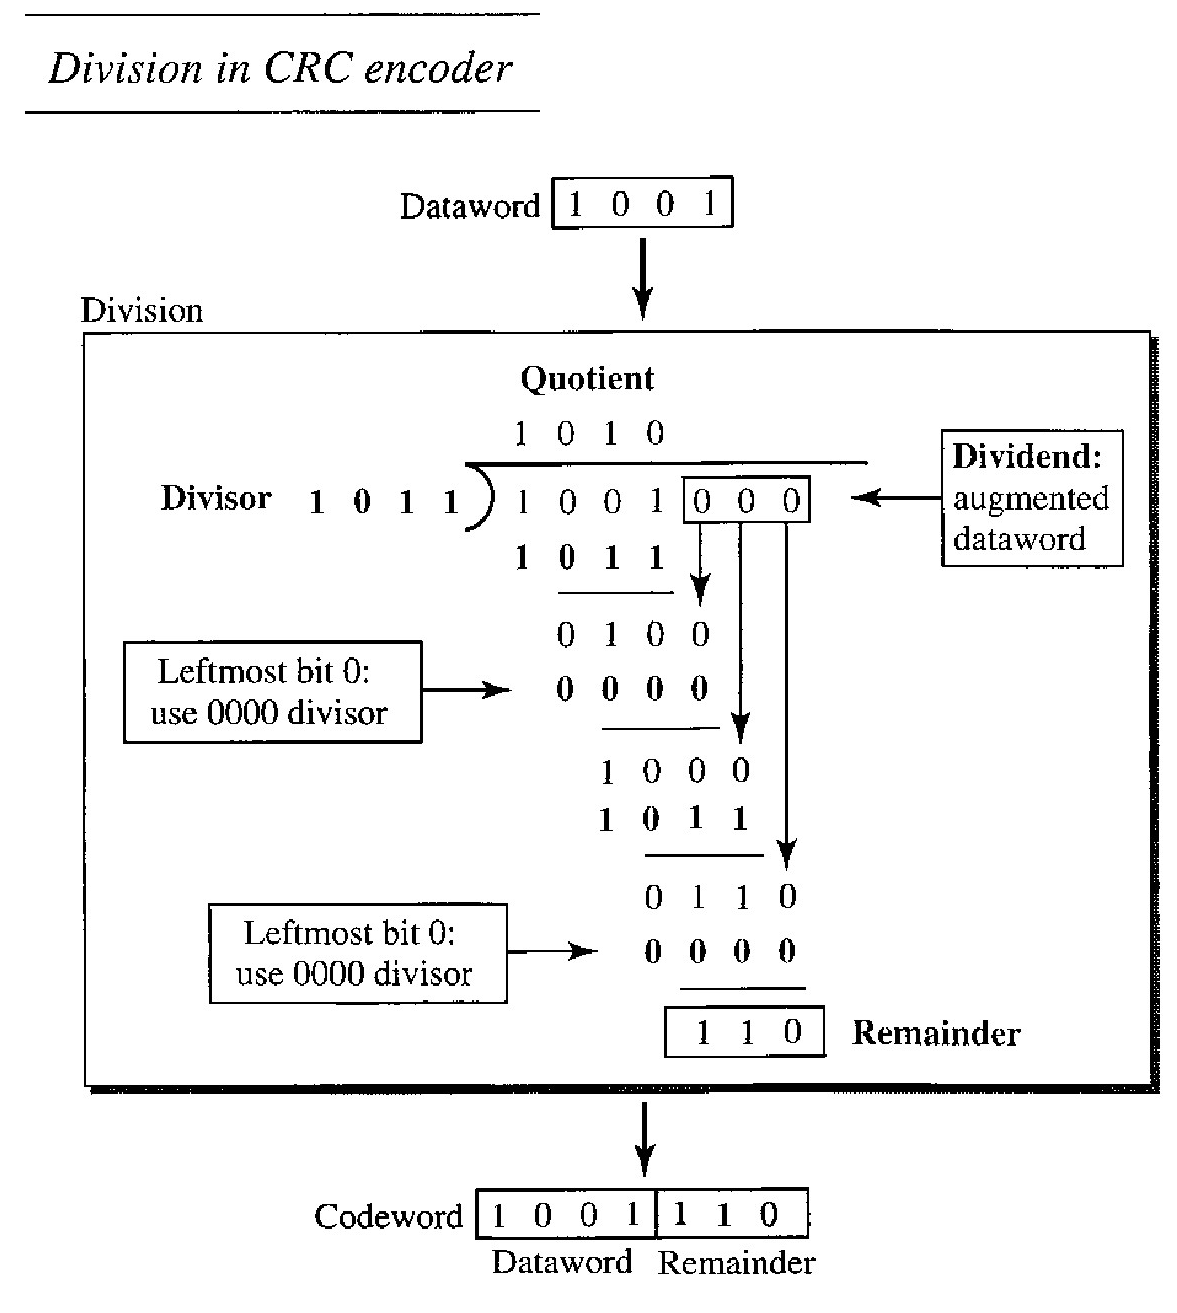 Encoder - Modulo 2 Division